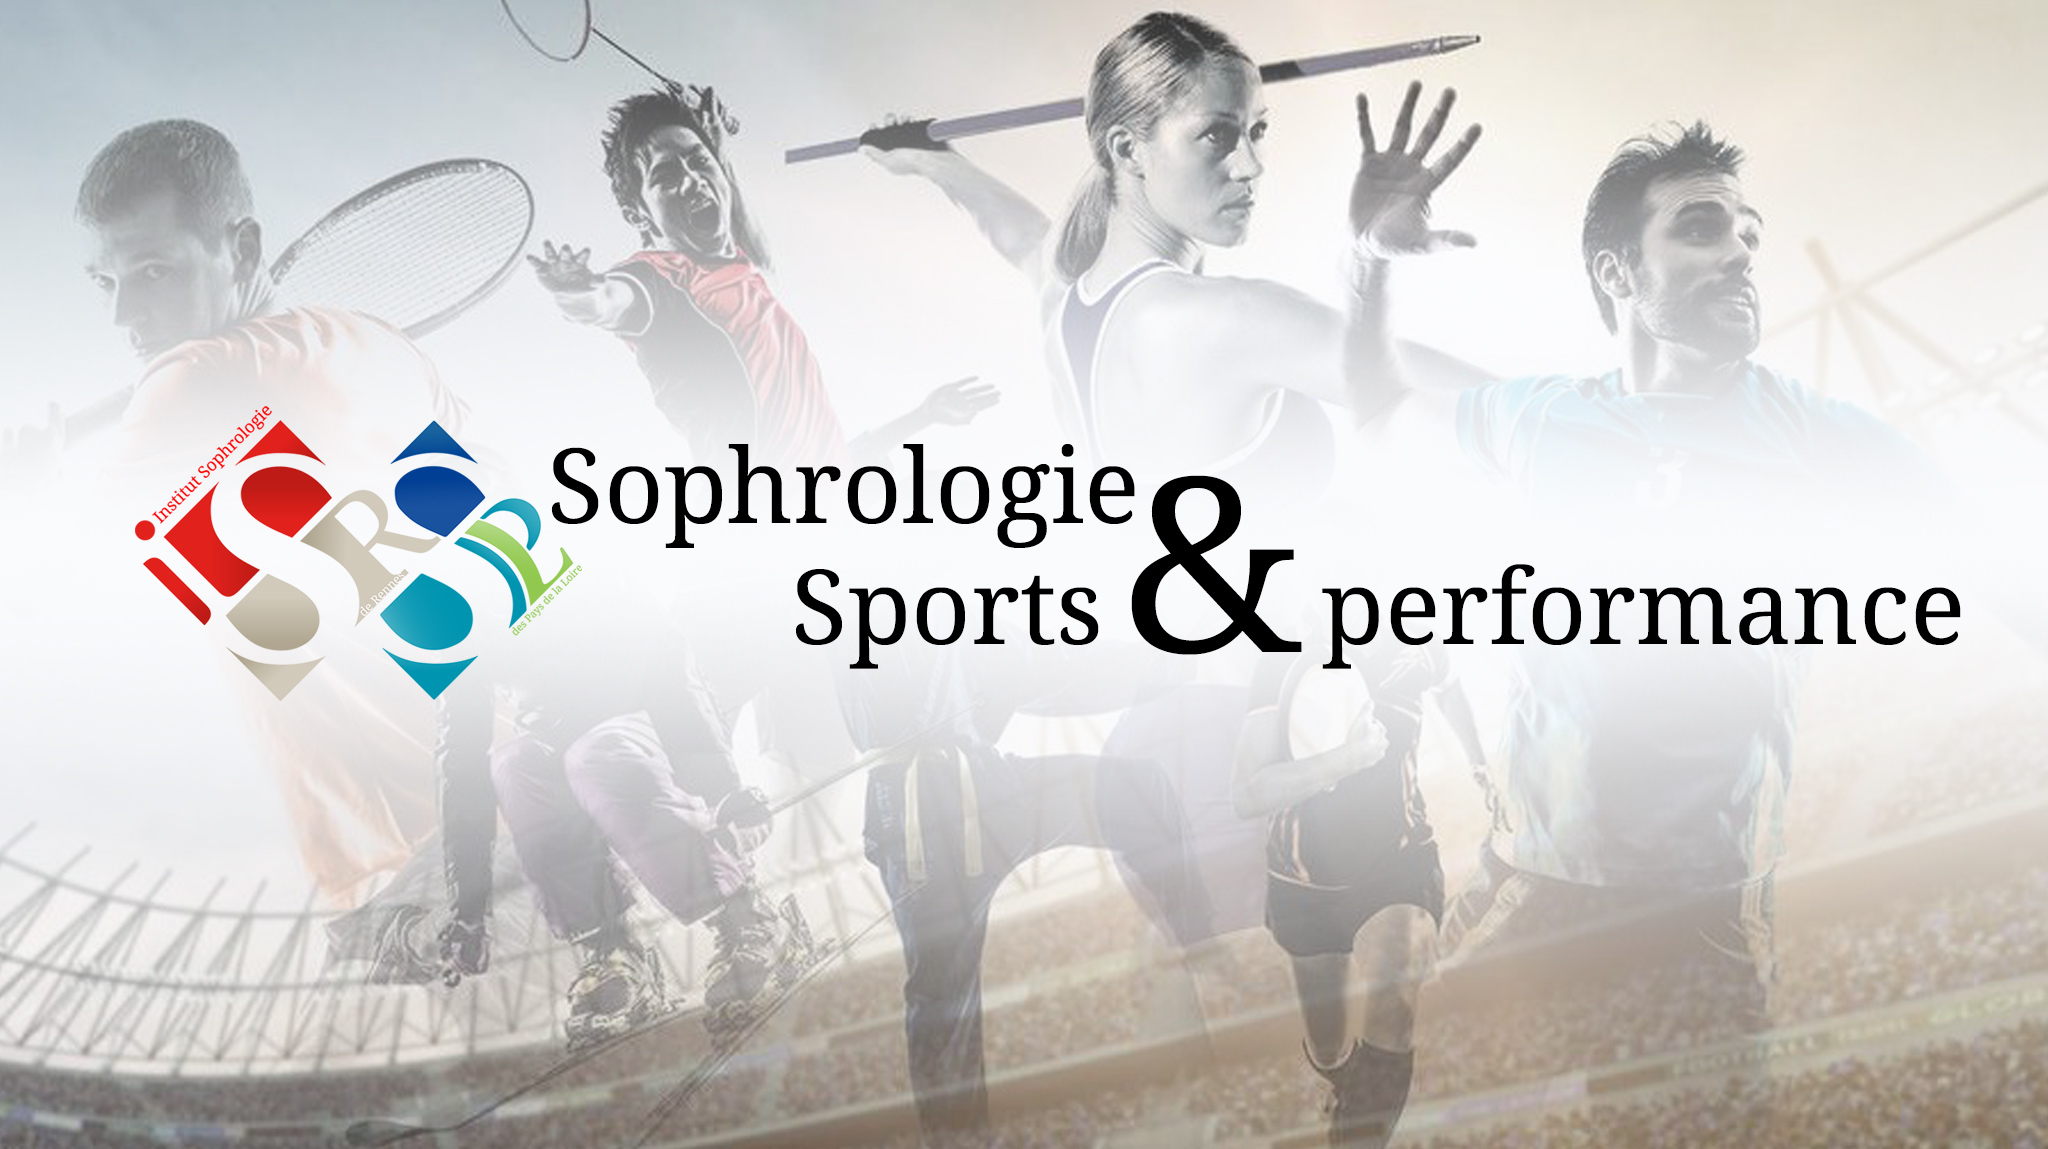 Sophrologie sports & performance